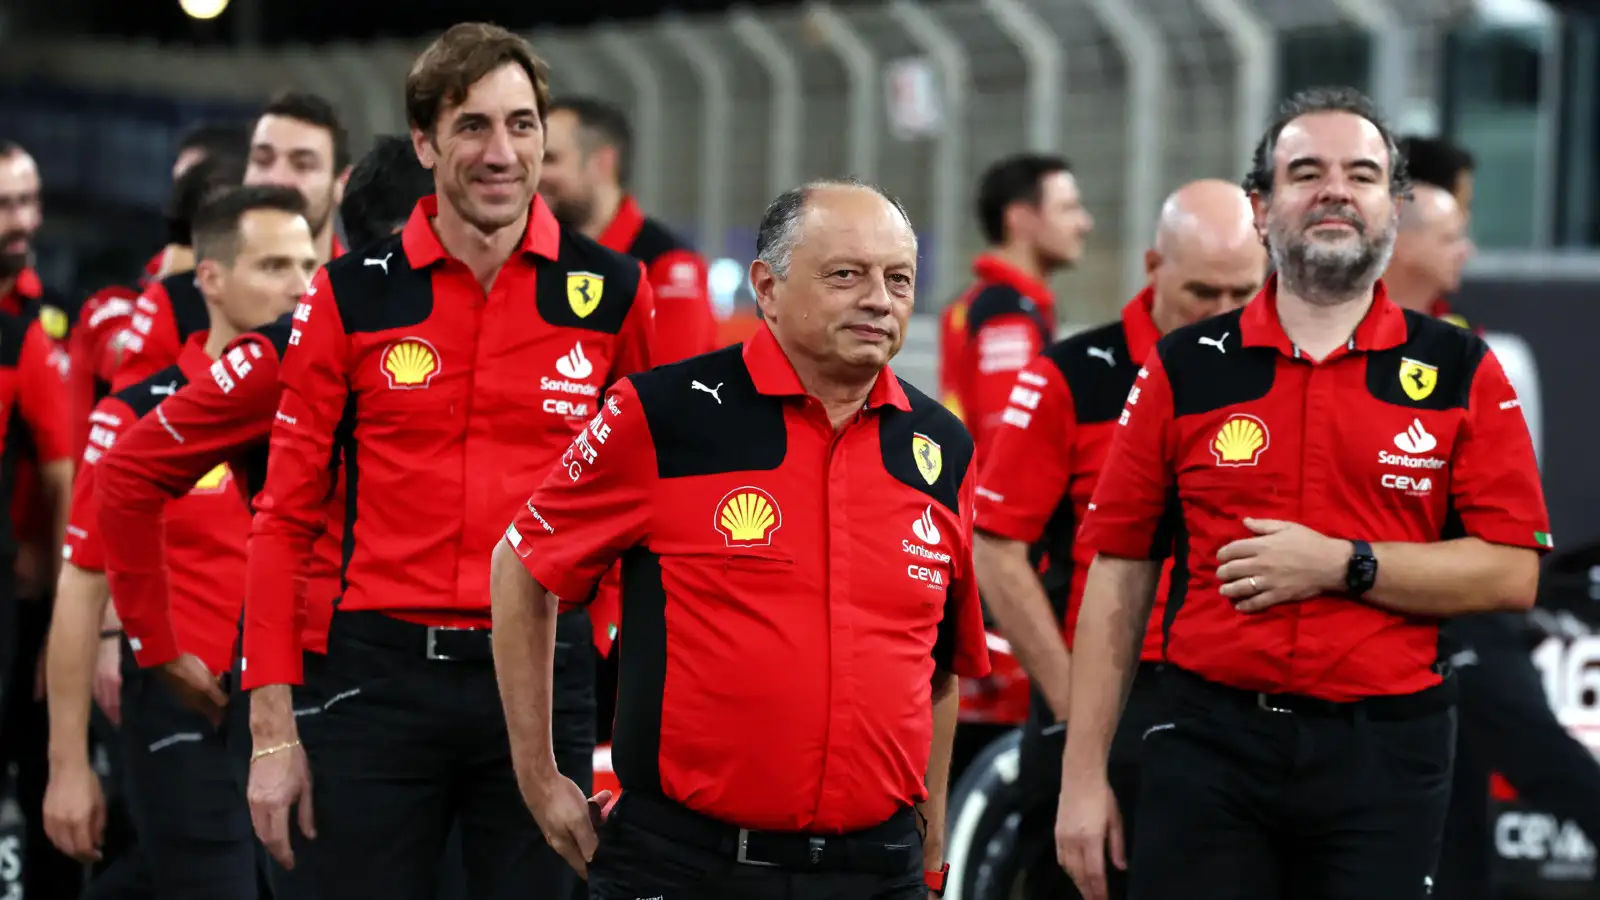 Fred Vasseur on track at the Abu Dhabi Grand Prix.